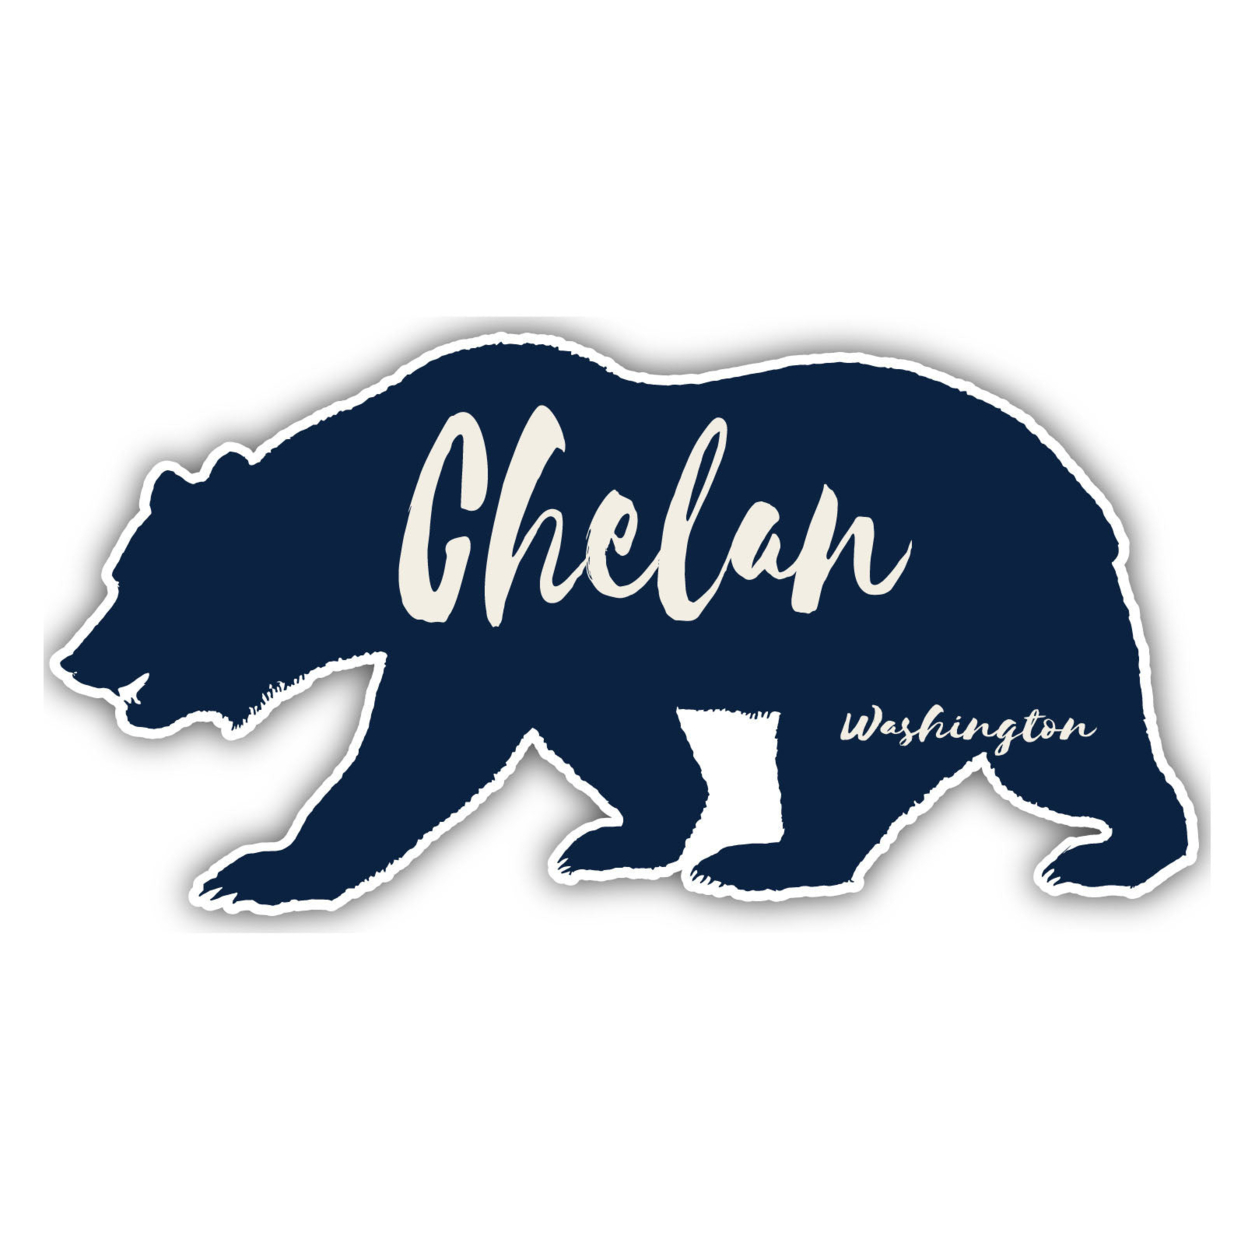 Chelan Washington Souvenir Decorative Stickers (Choose Theme And Size) - 4-Pack, 8-Inch, Camp Life